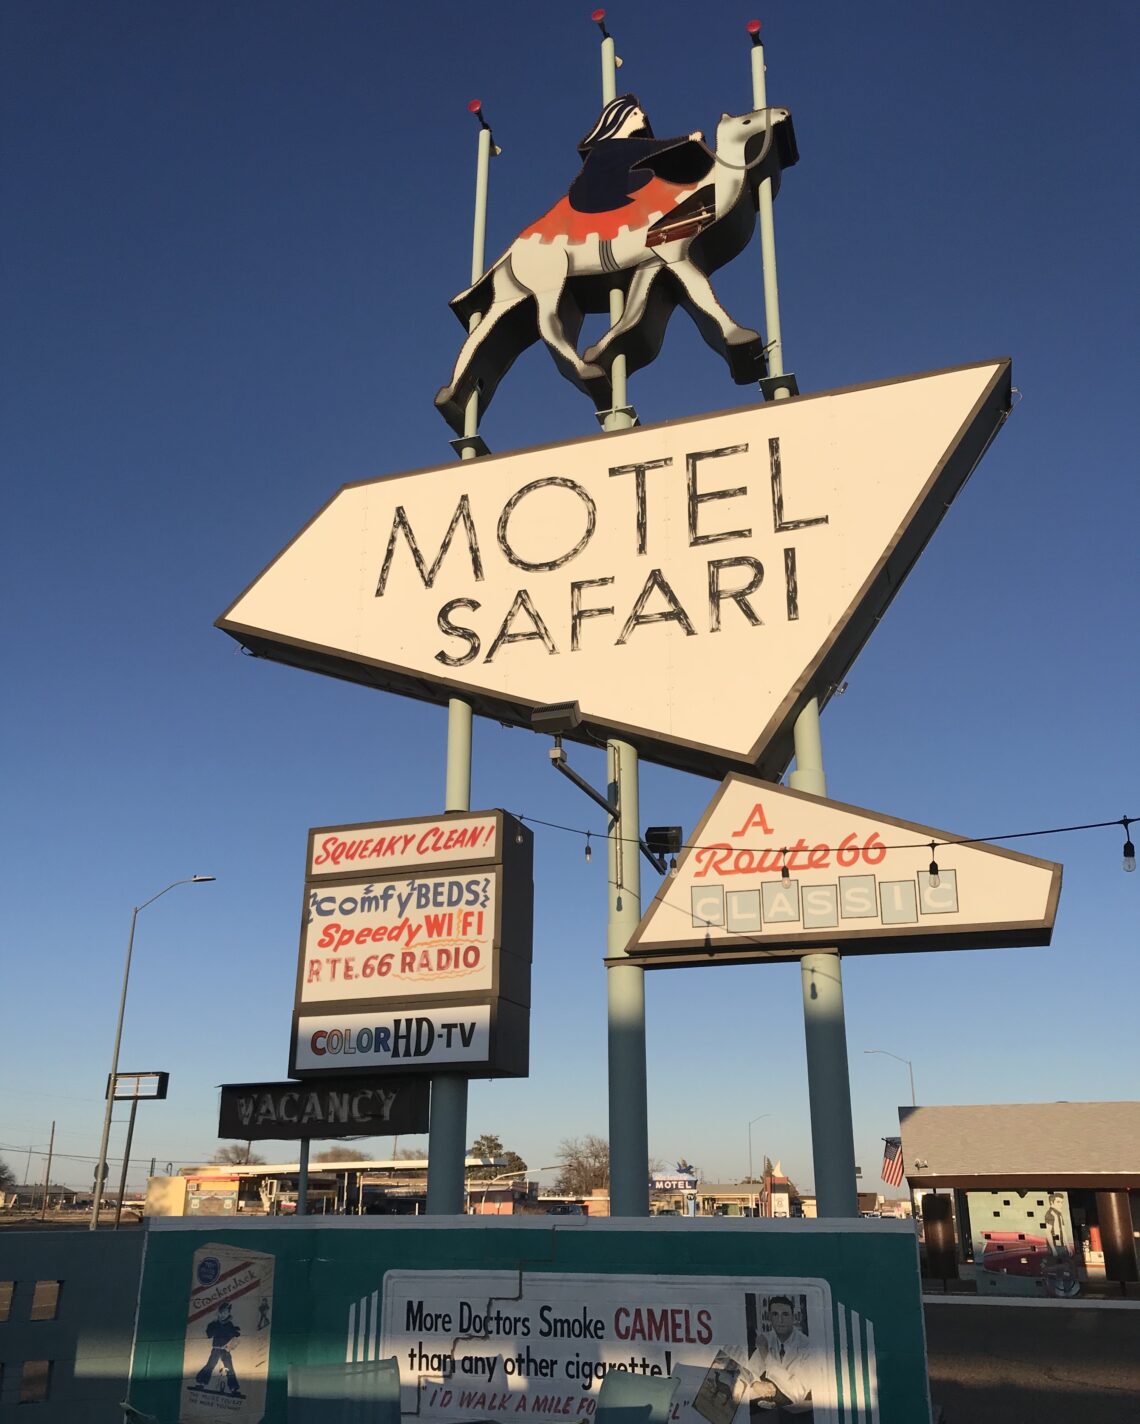 Safari Motel in Tucumcari